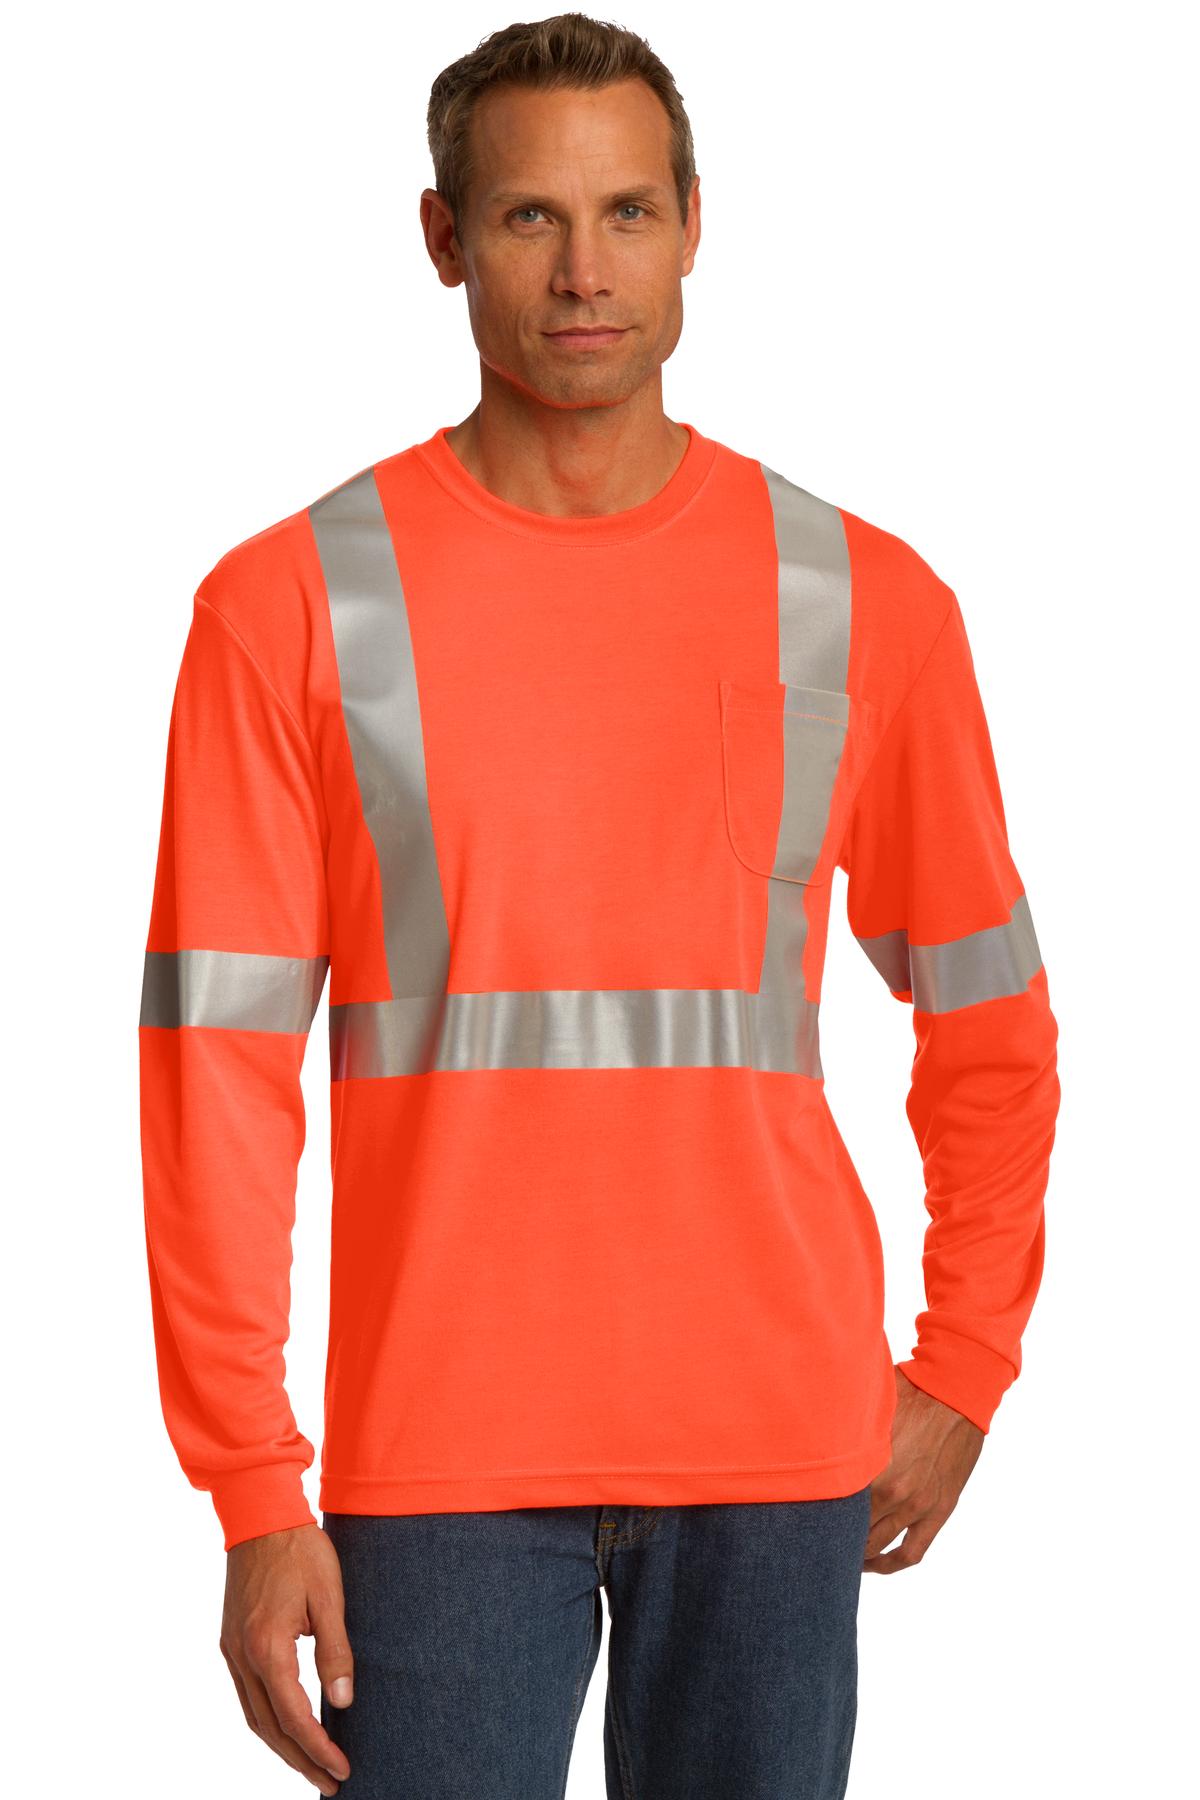 CornerStone Corporate Hospitality TShirts & Workwear ® ANSI 107 Class 2 Long Sleeve Safety T-Shirt.-CornerStone